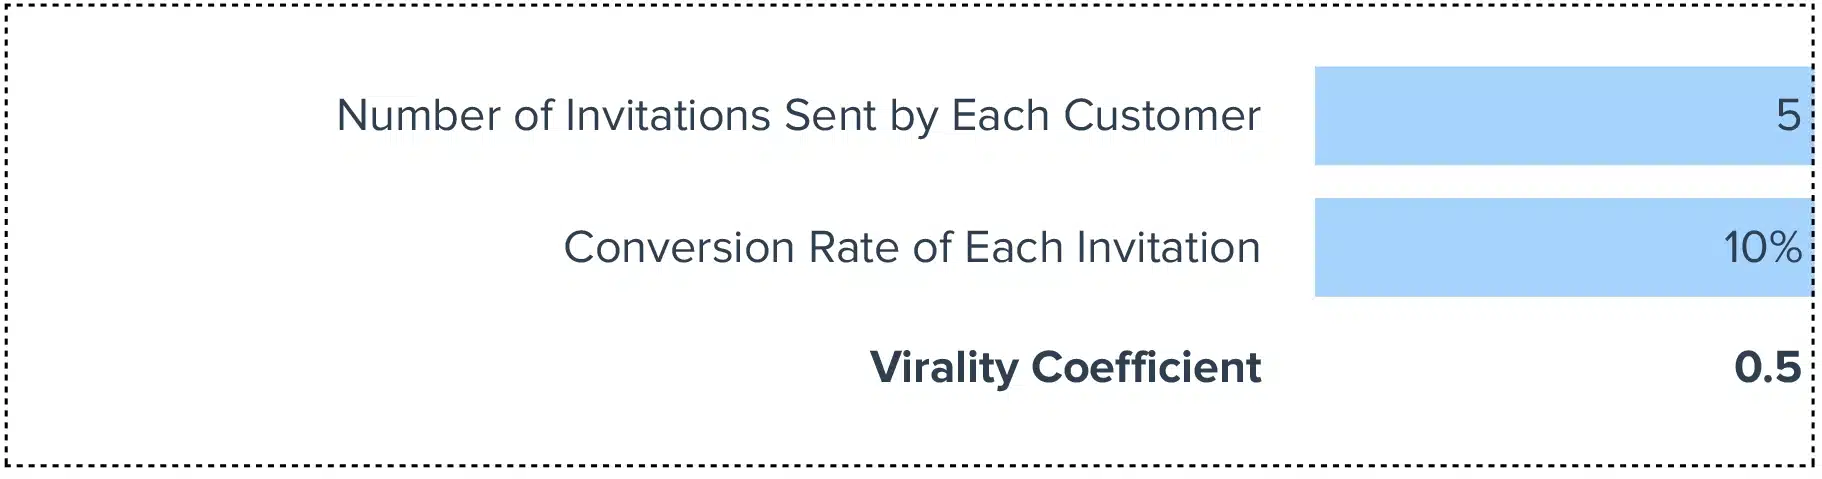 Virality Coefficient